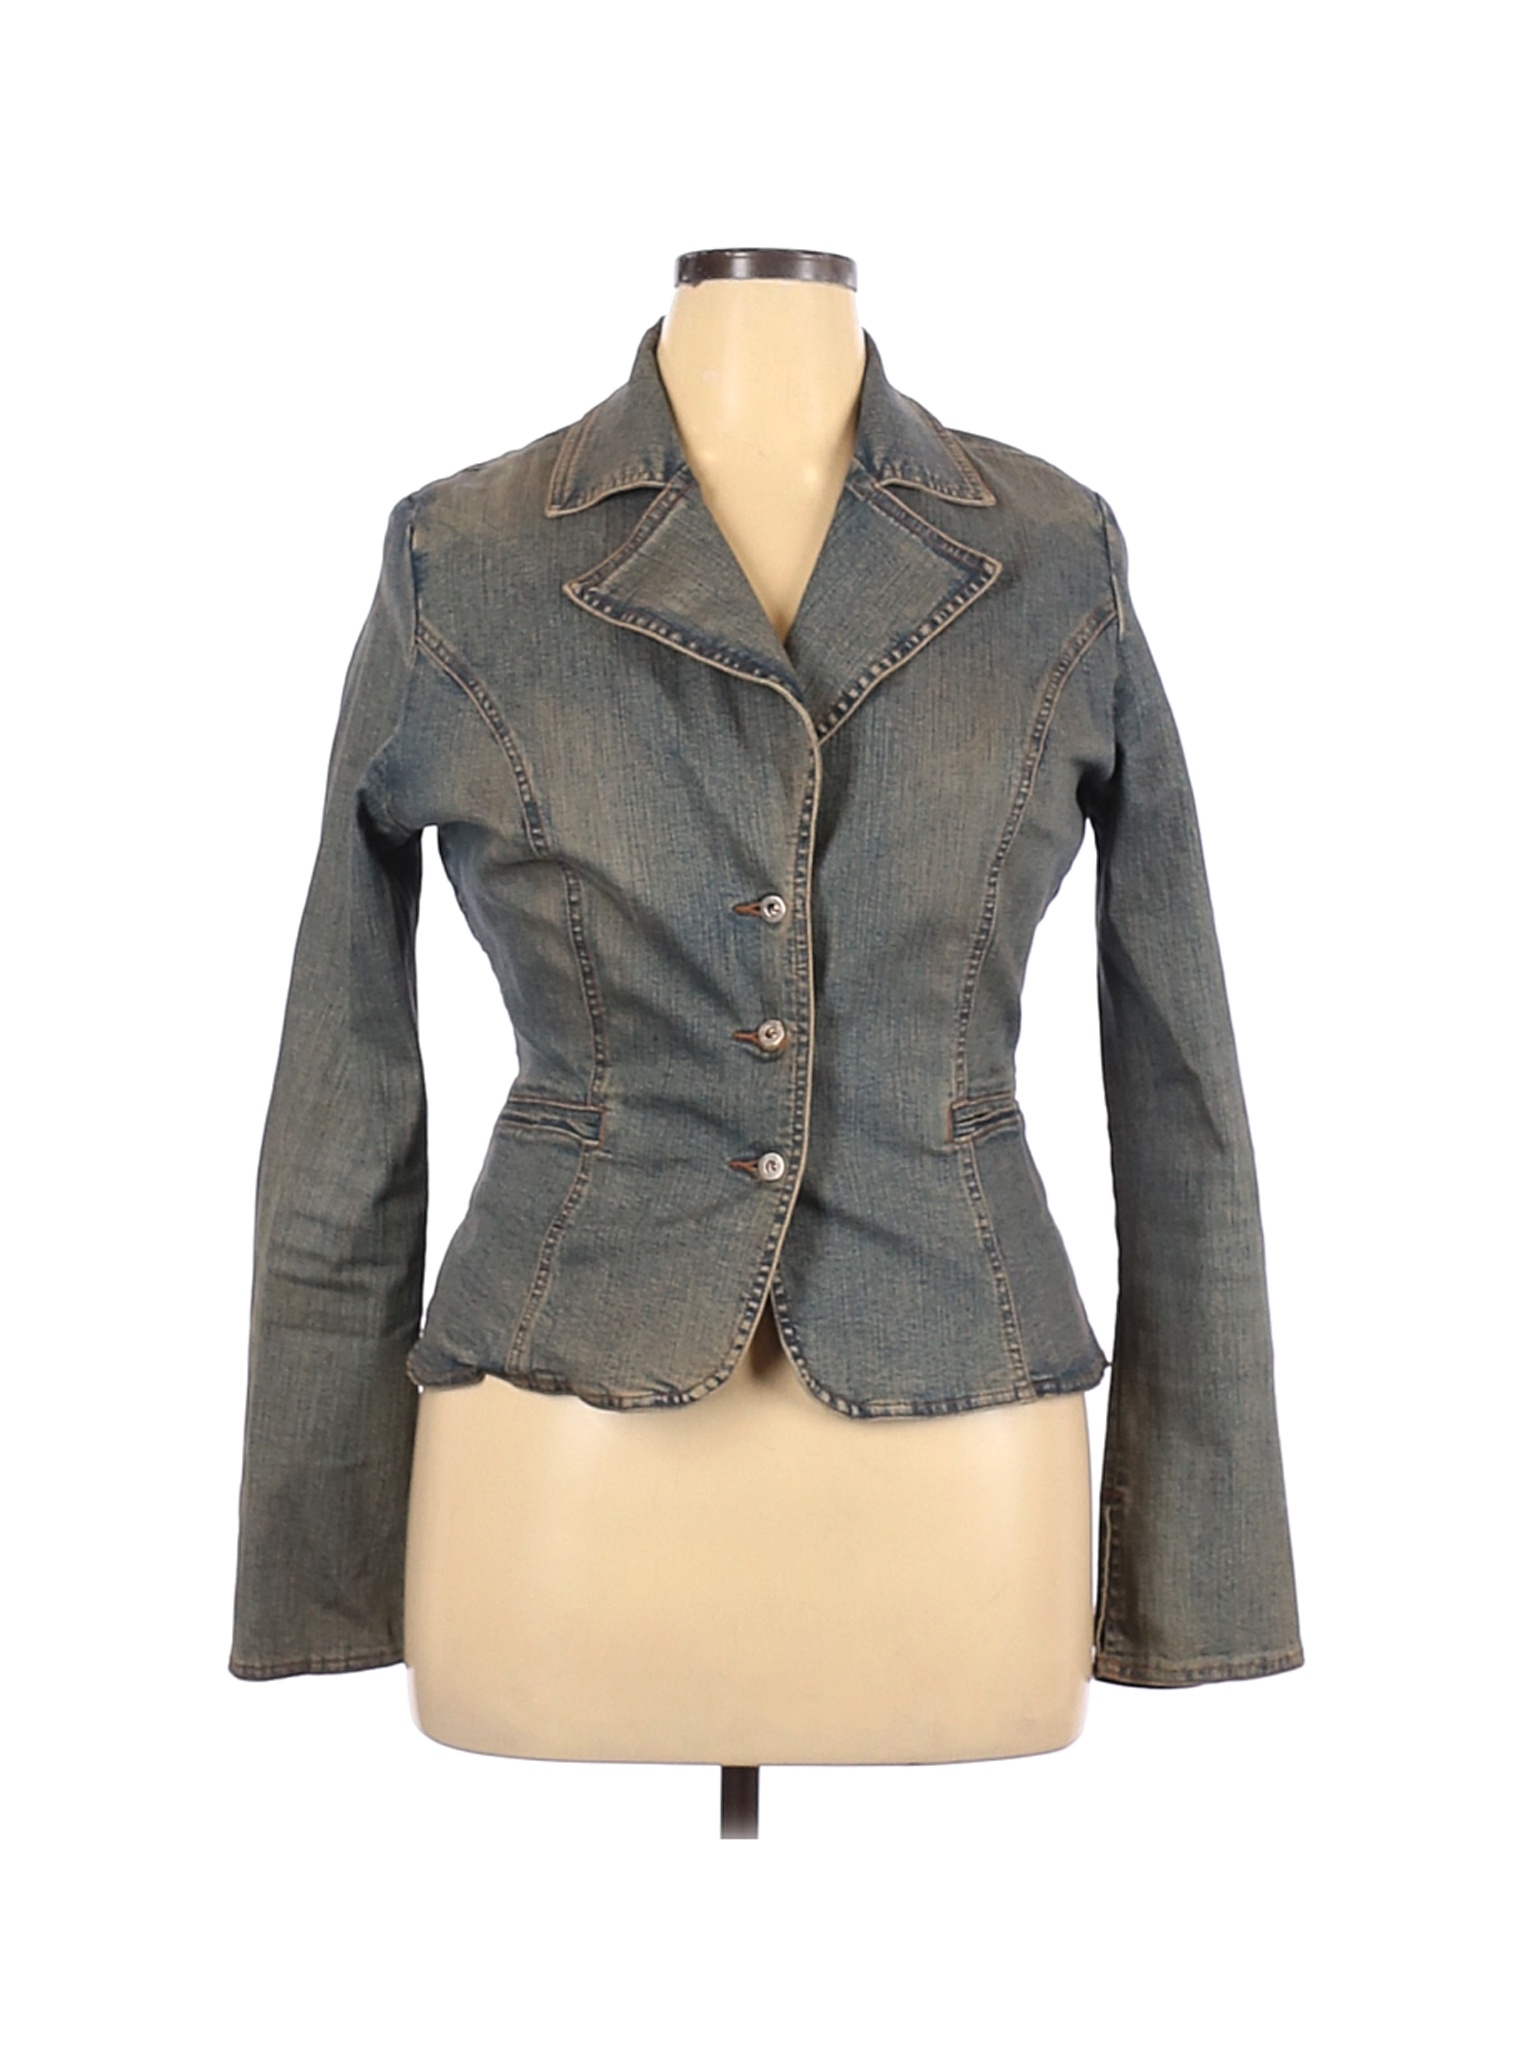 Guess Women Gray Denim Jacket L | eBay